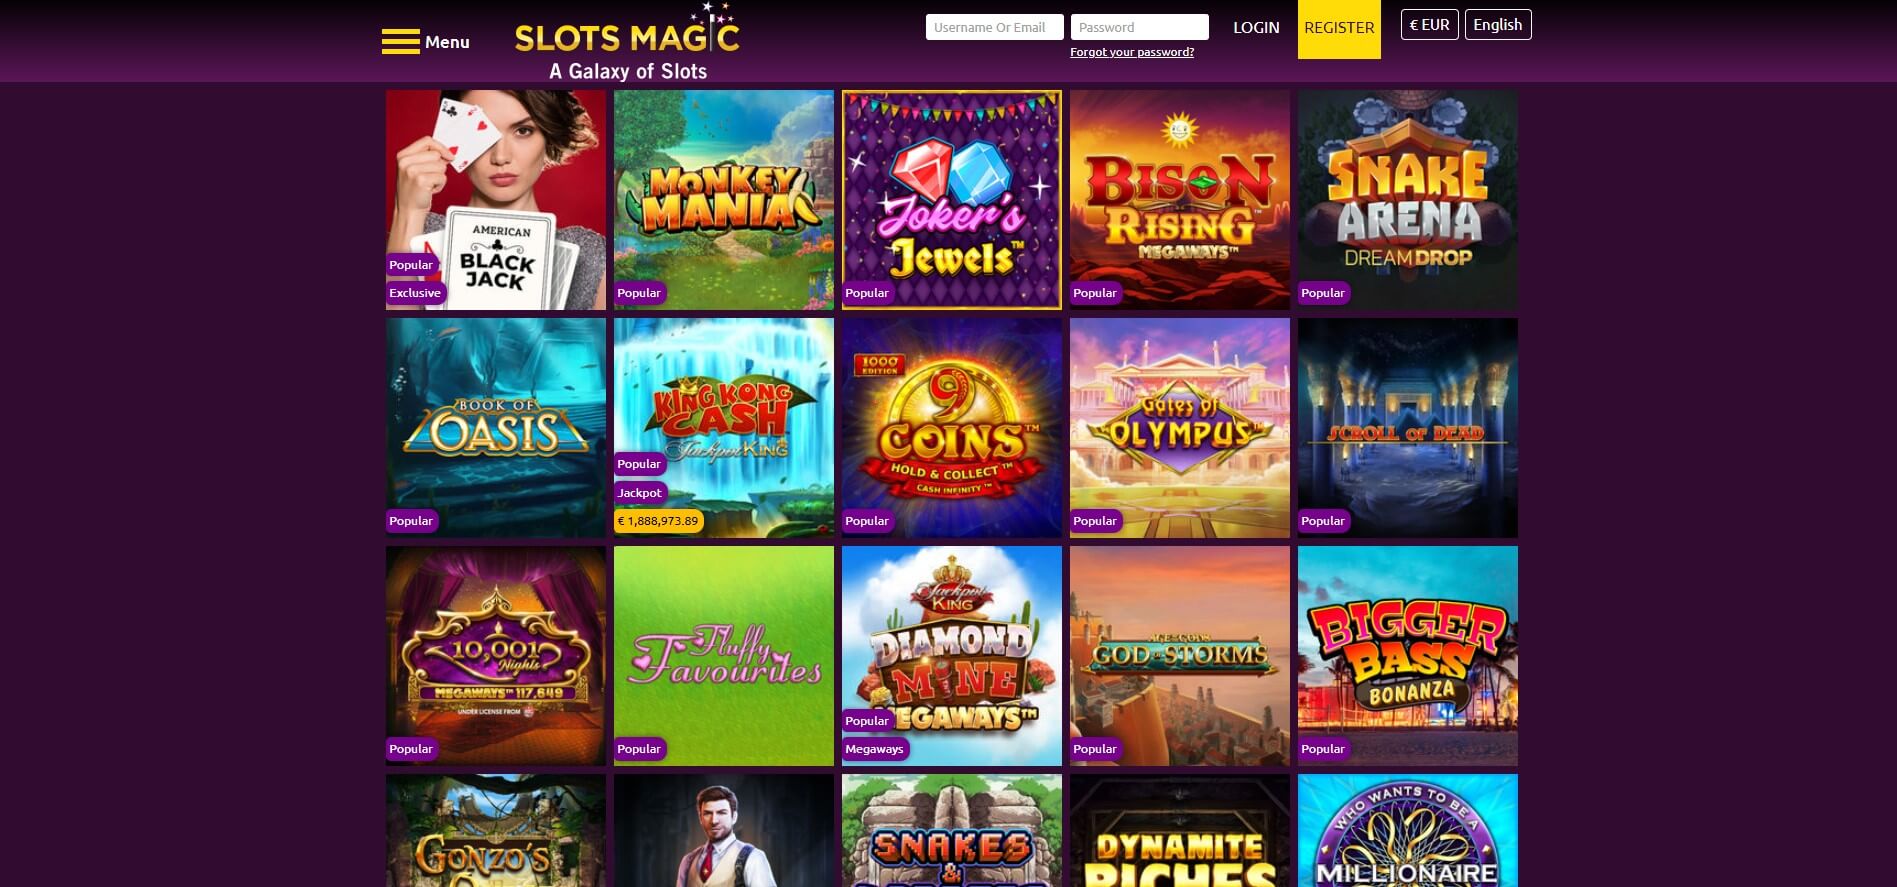 SlotsMagic Casino Games